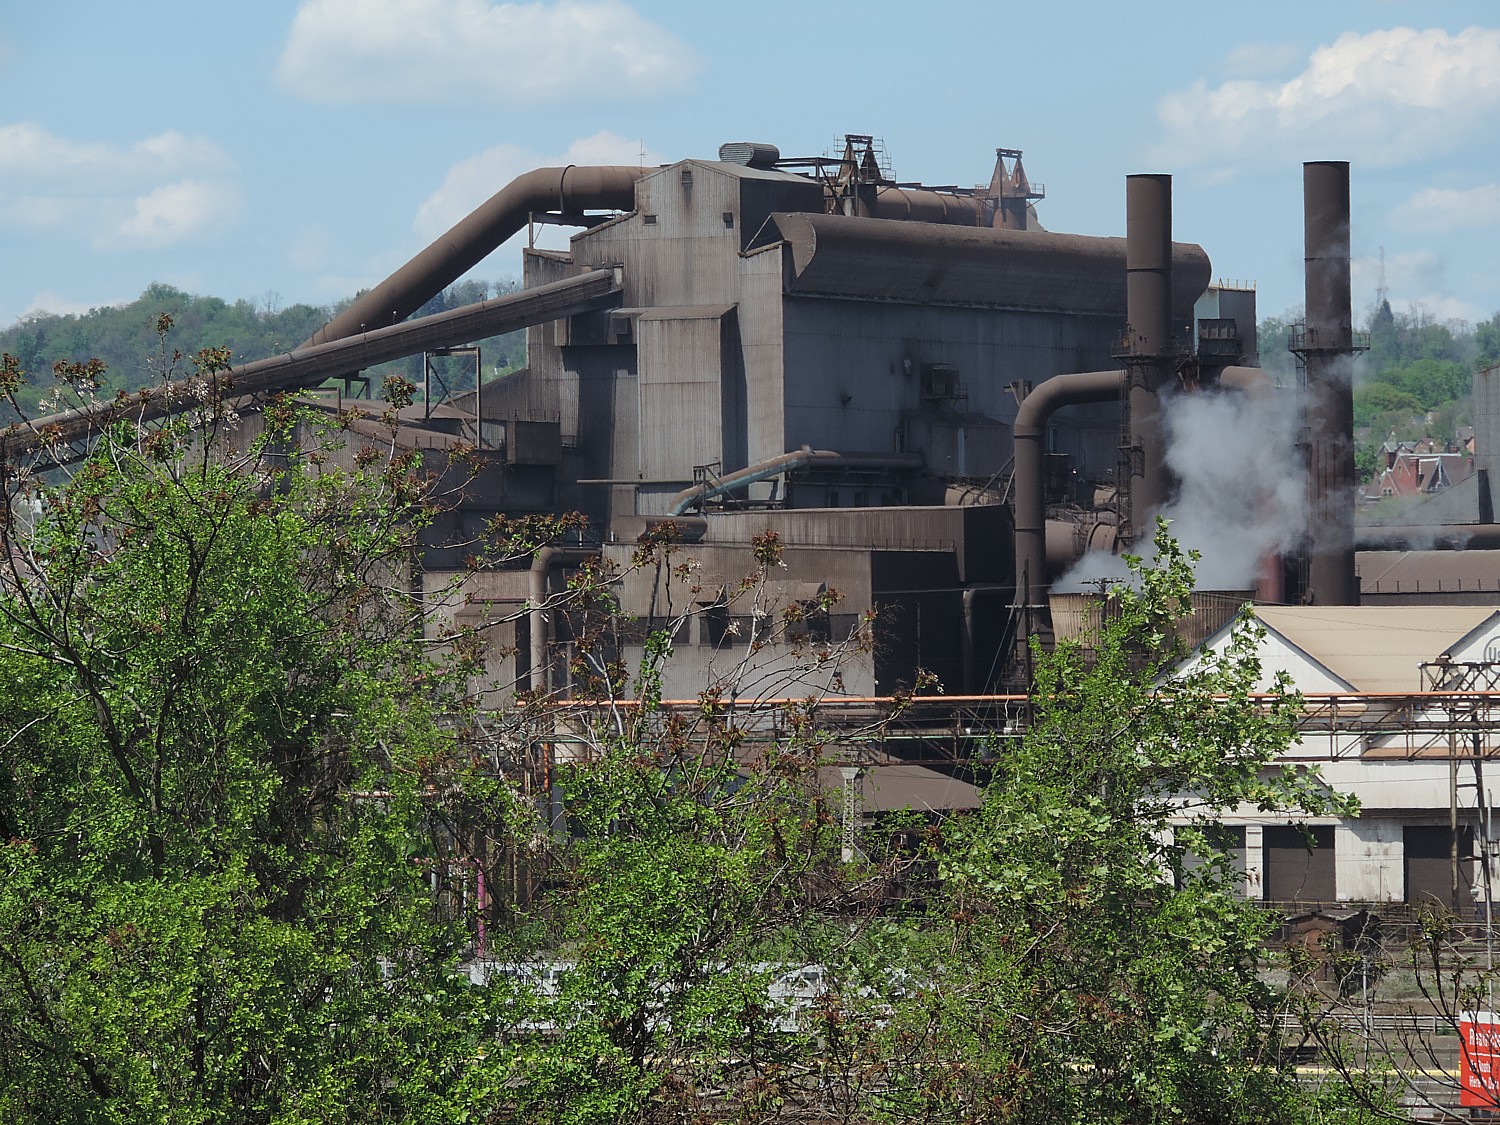 Pittsburgh’s industrial past comes into view © 2016 Karen Rubin/goingplacesfarandnear.com